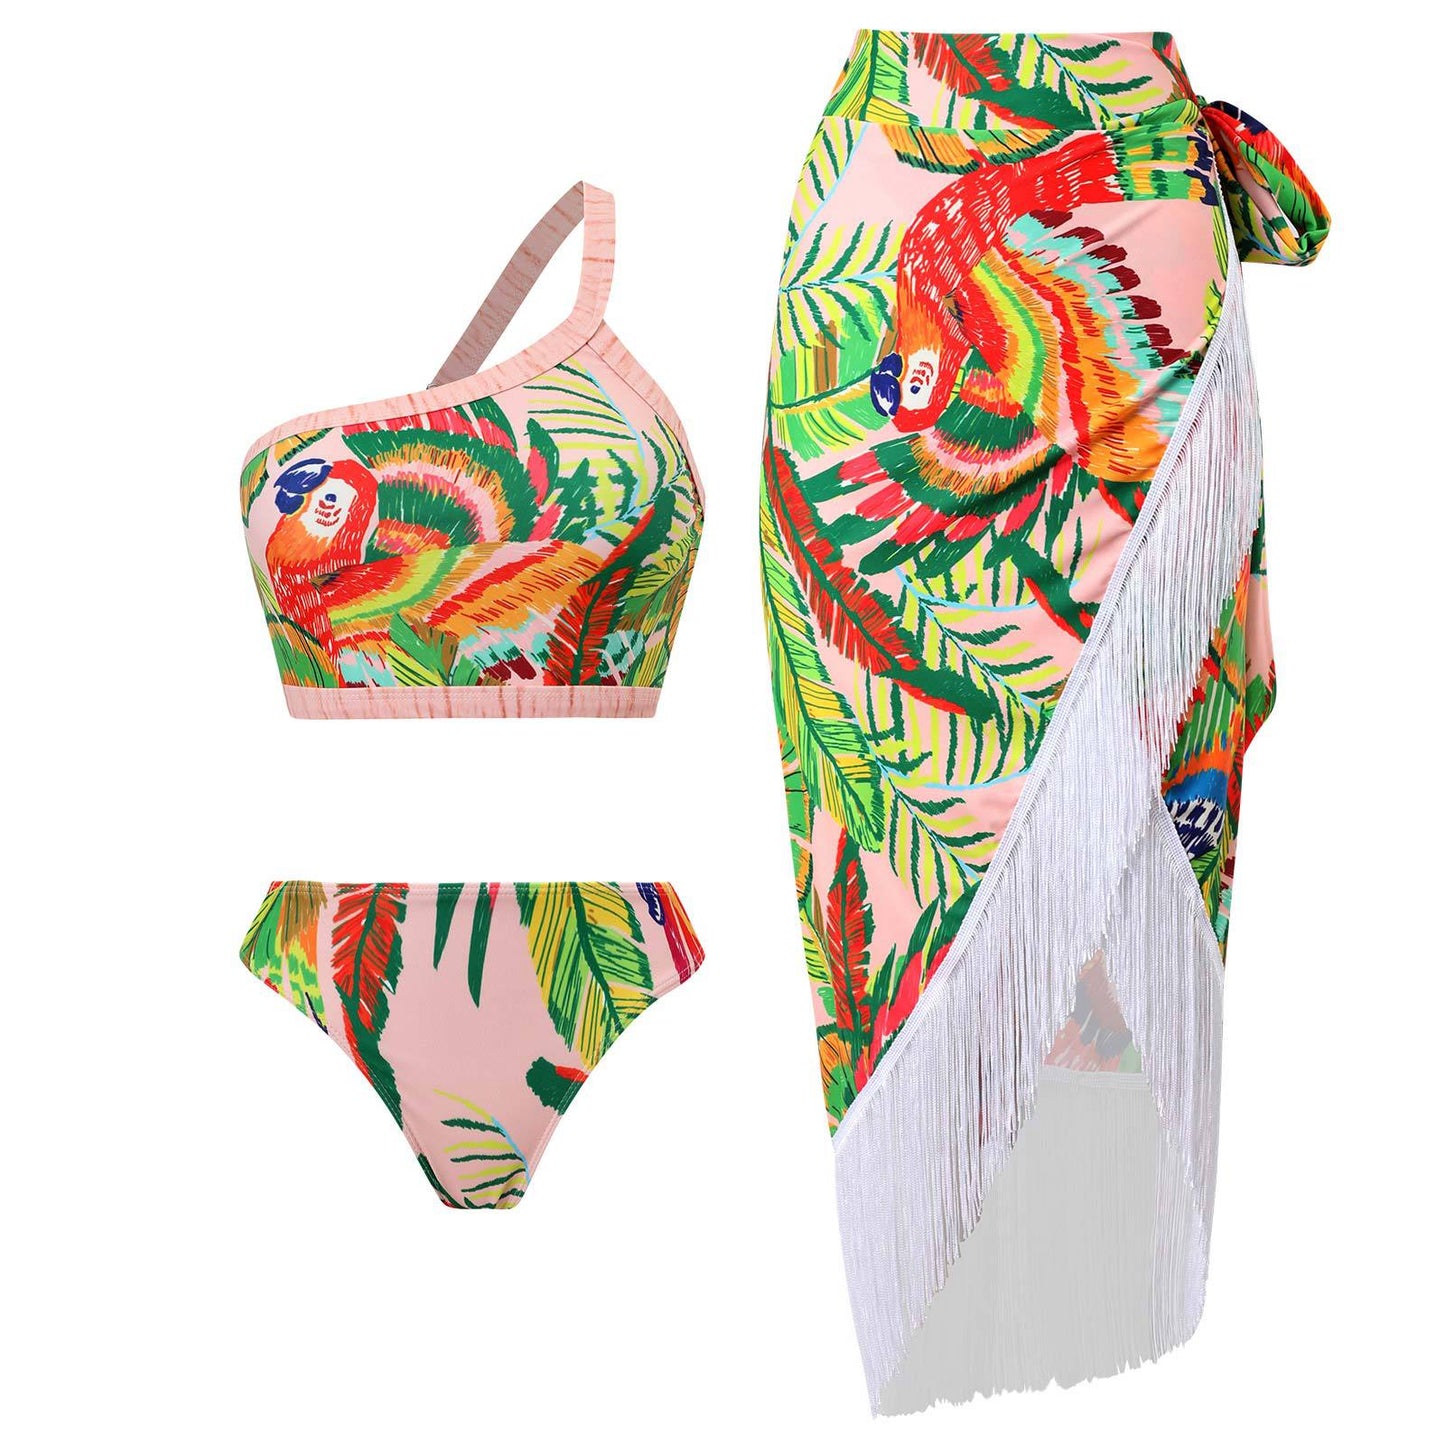 New 2-Piece Women Bikini Set Push Up Floral Printed Ruffle Bikinis Strappy Bandage Swimwear Brazilian Biquini Bathing Suit QJY85P1